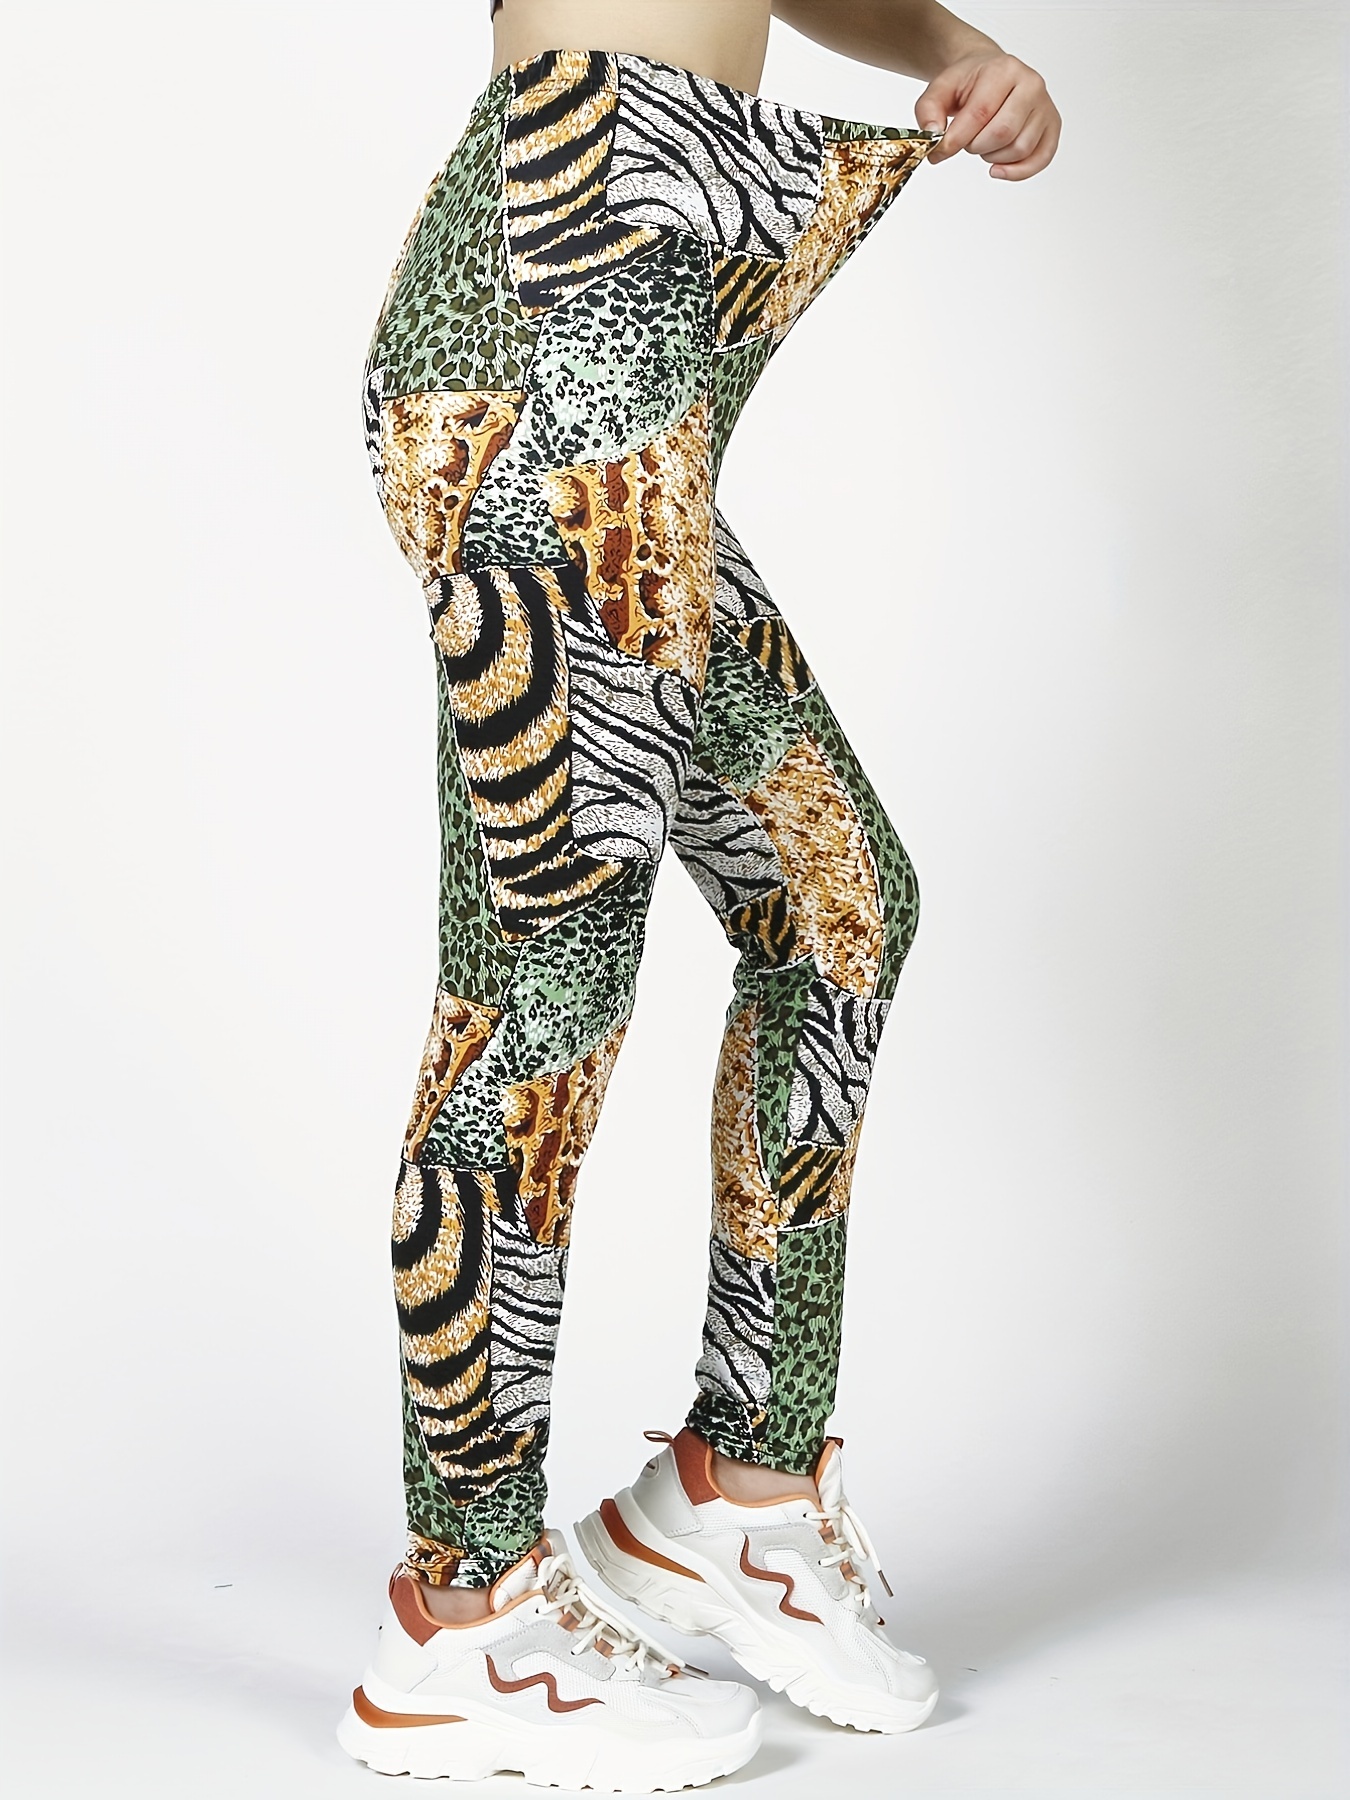 African Animal Leopard Tiger Zebra Skin Print Leggings Alternative Fashion  Trend